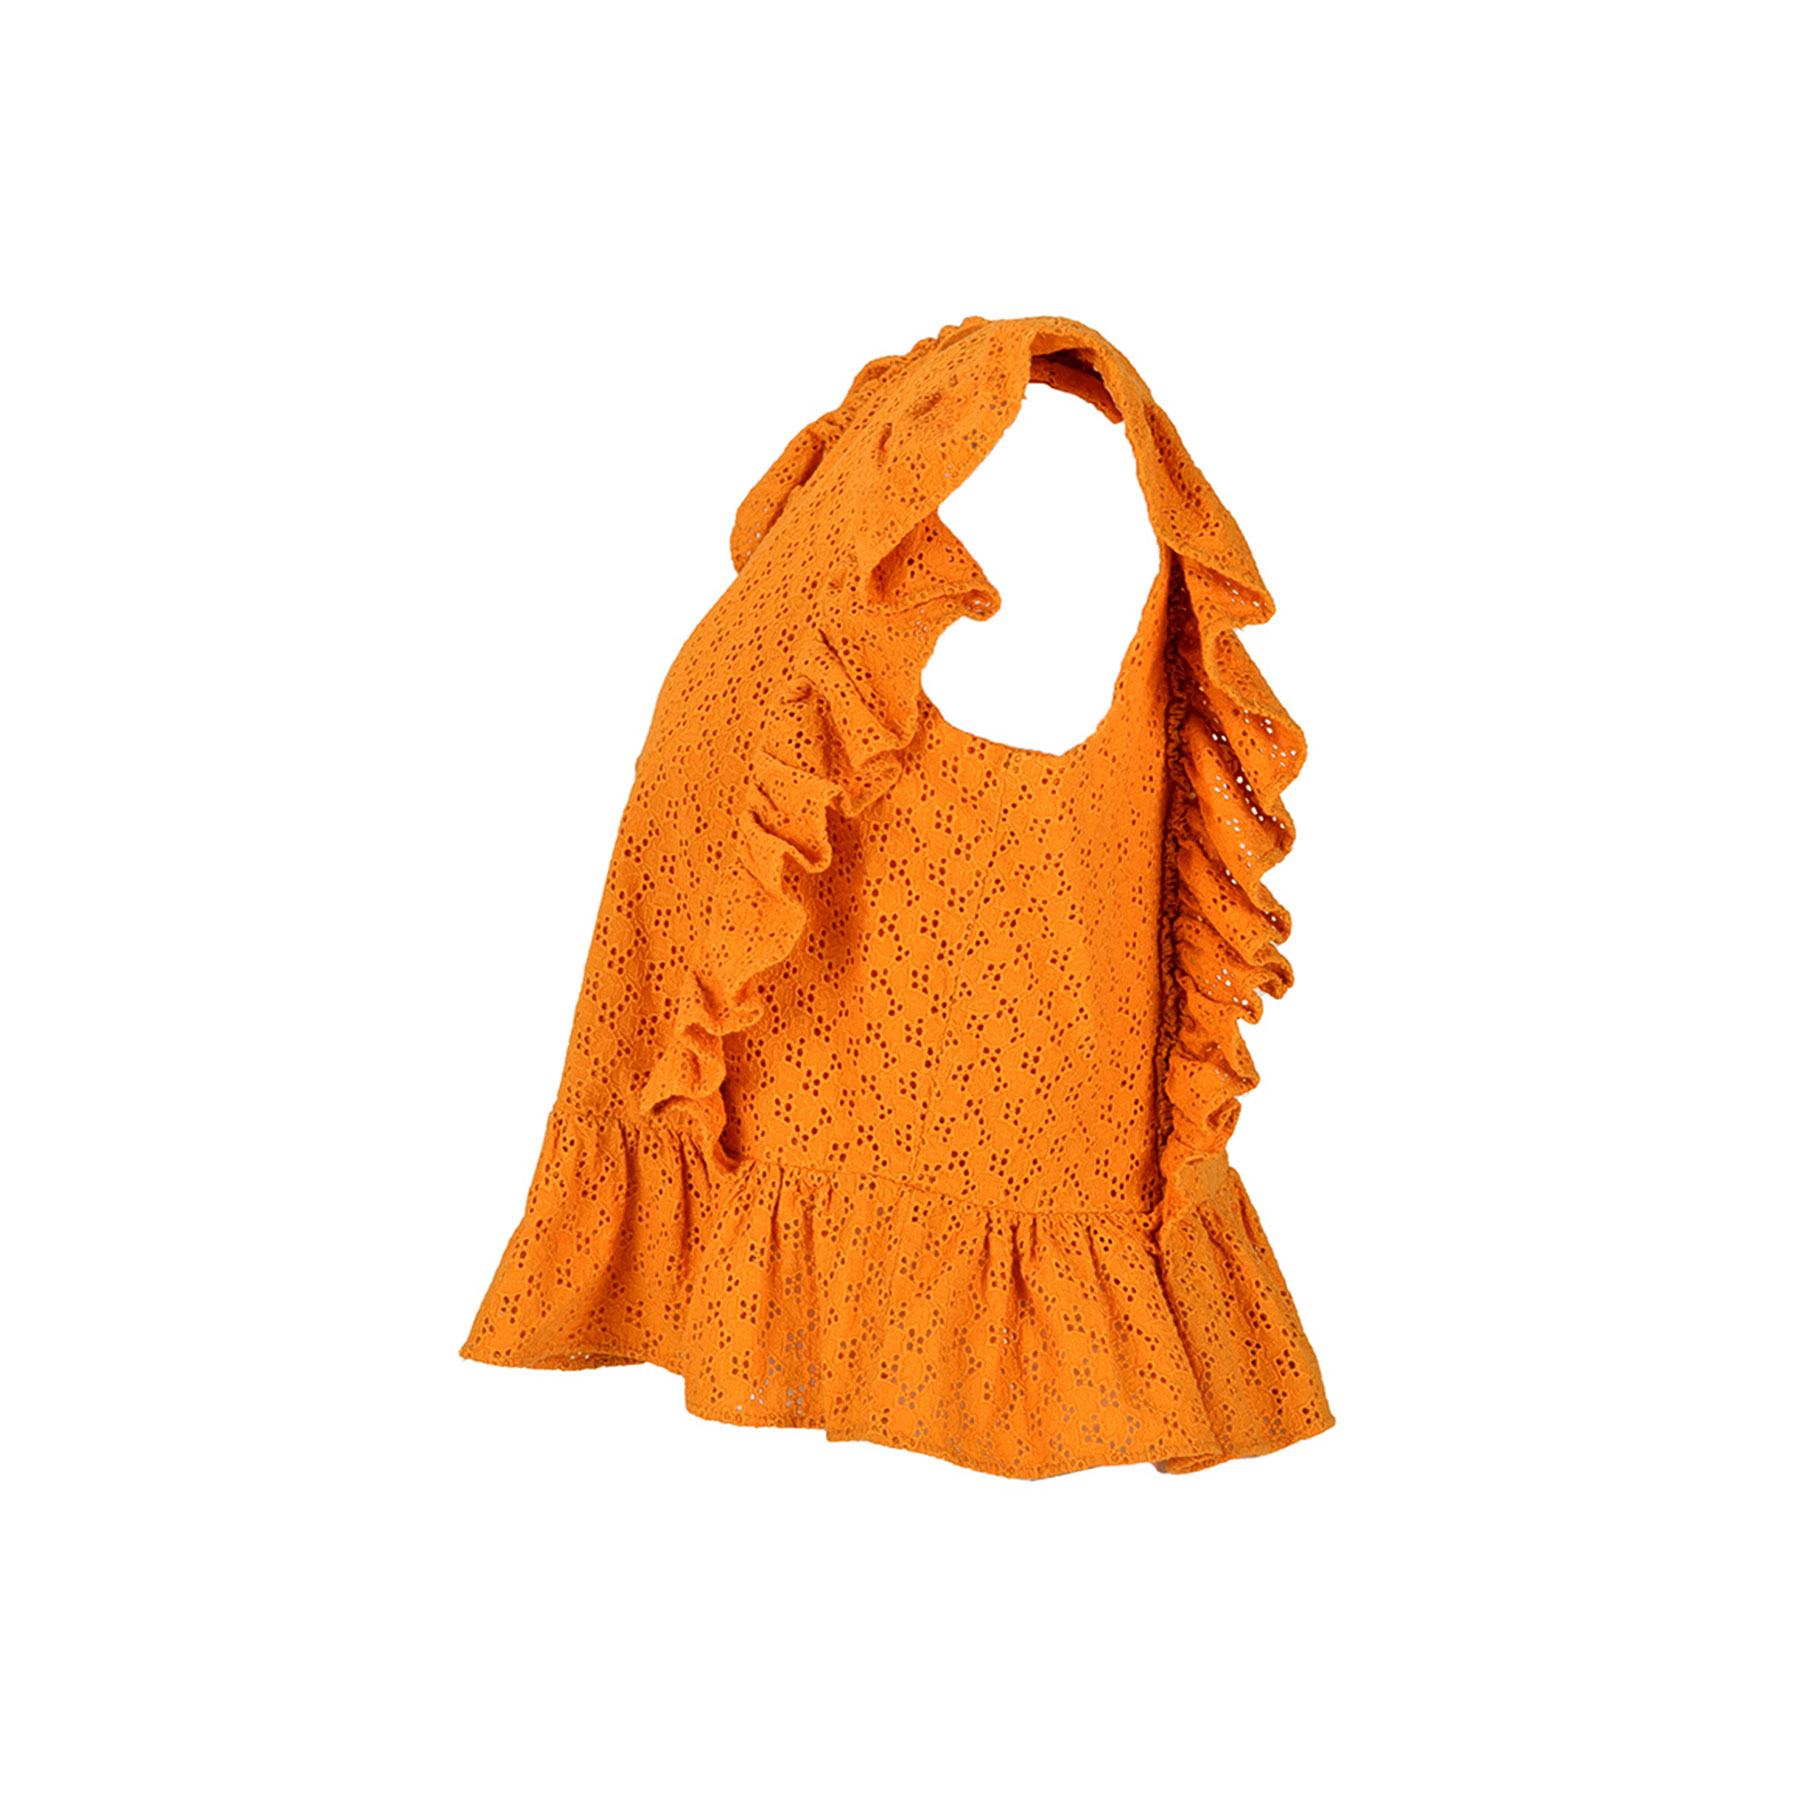 بلوز آستین کوتاه زنانه بادی اسپینر مدل 3883 کد 1 رنگ نارنجی -  - 2